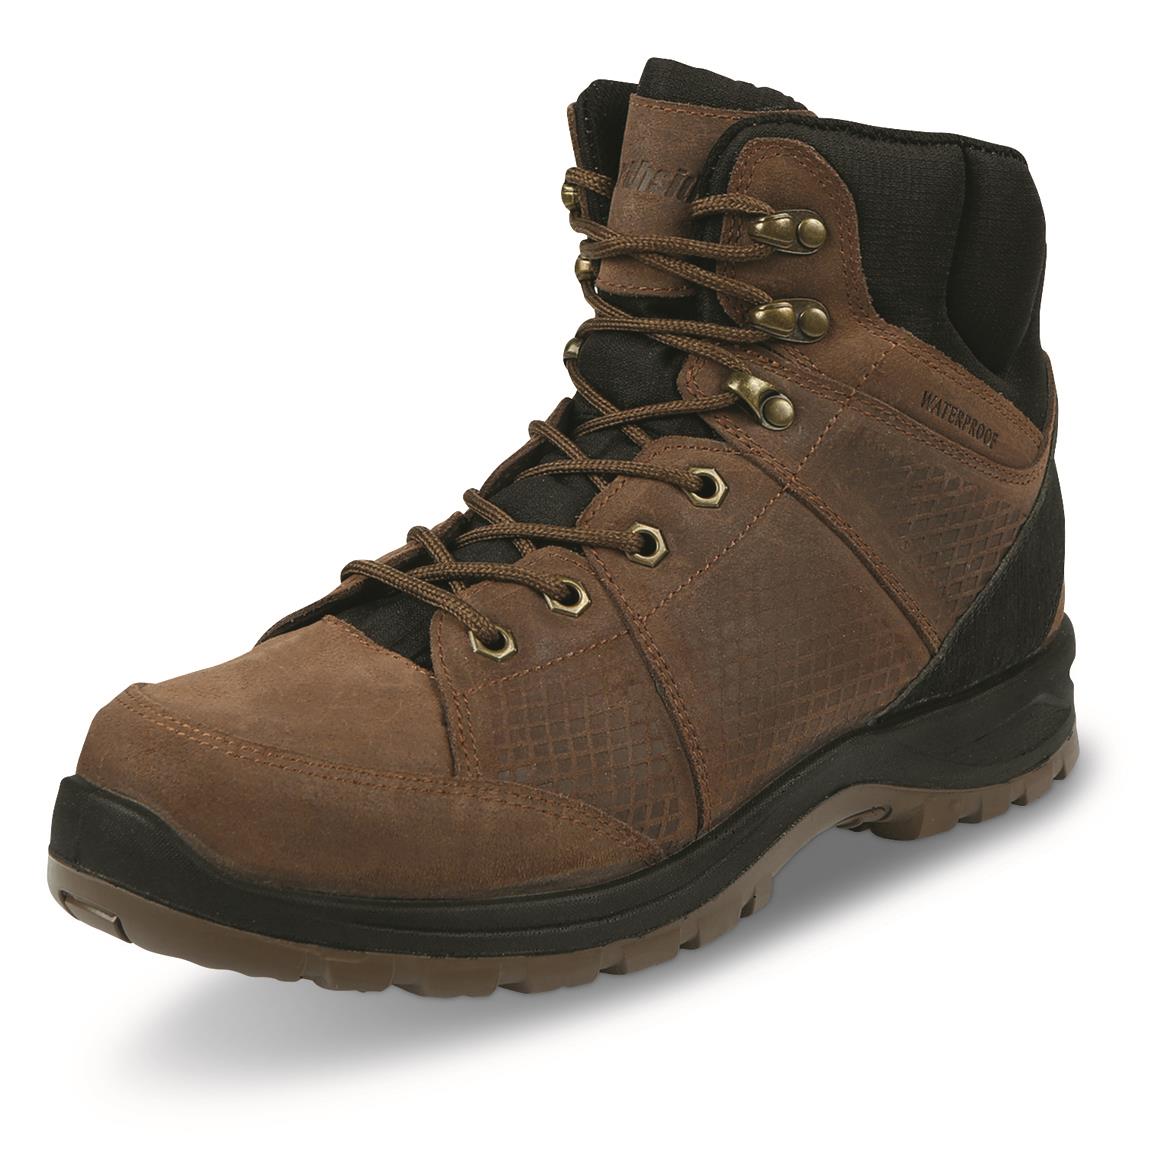 Northside Men's Rockford Waterproof Hiking Boots - 722028, Hiking Boots ...